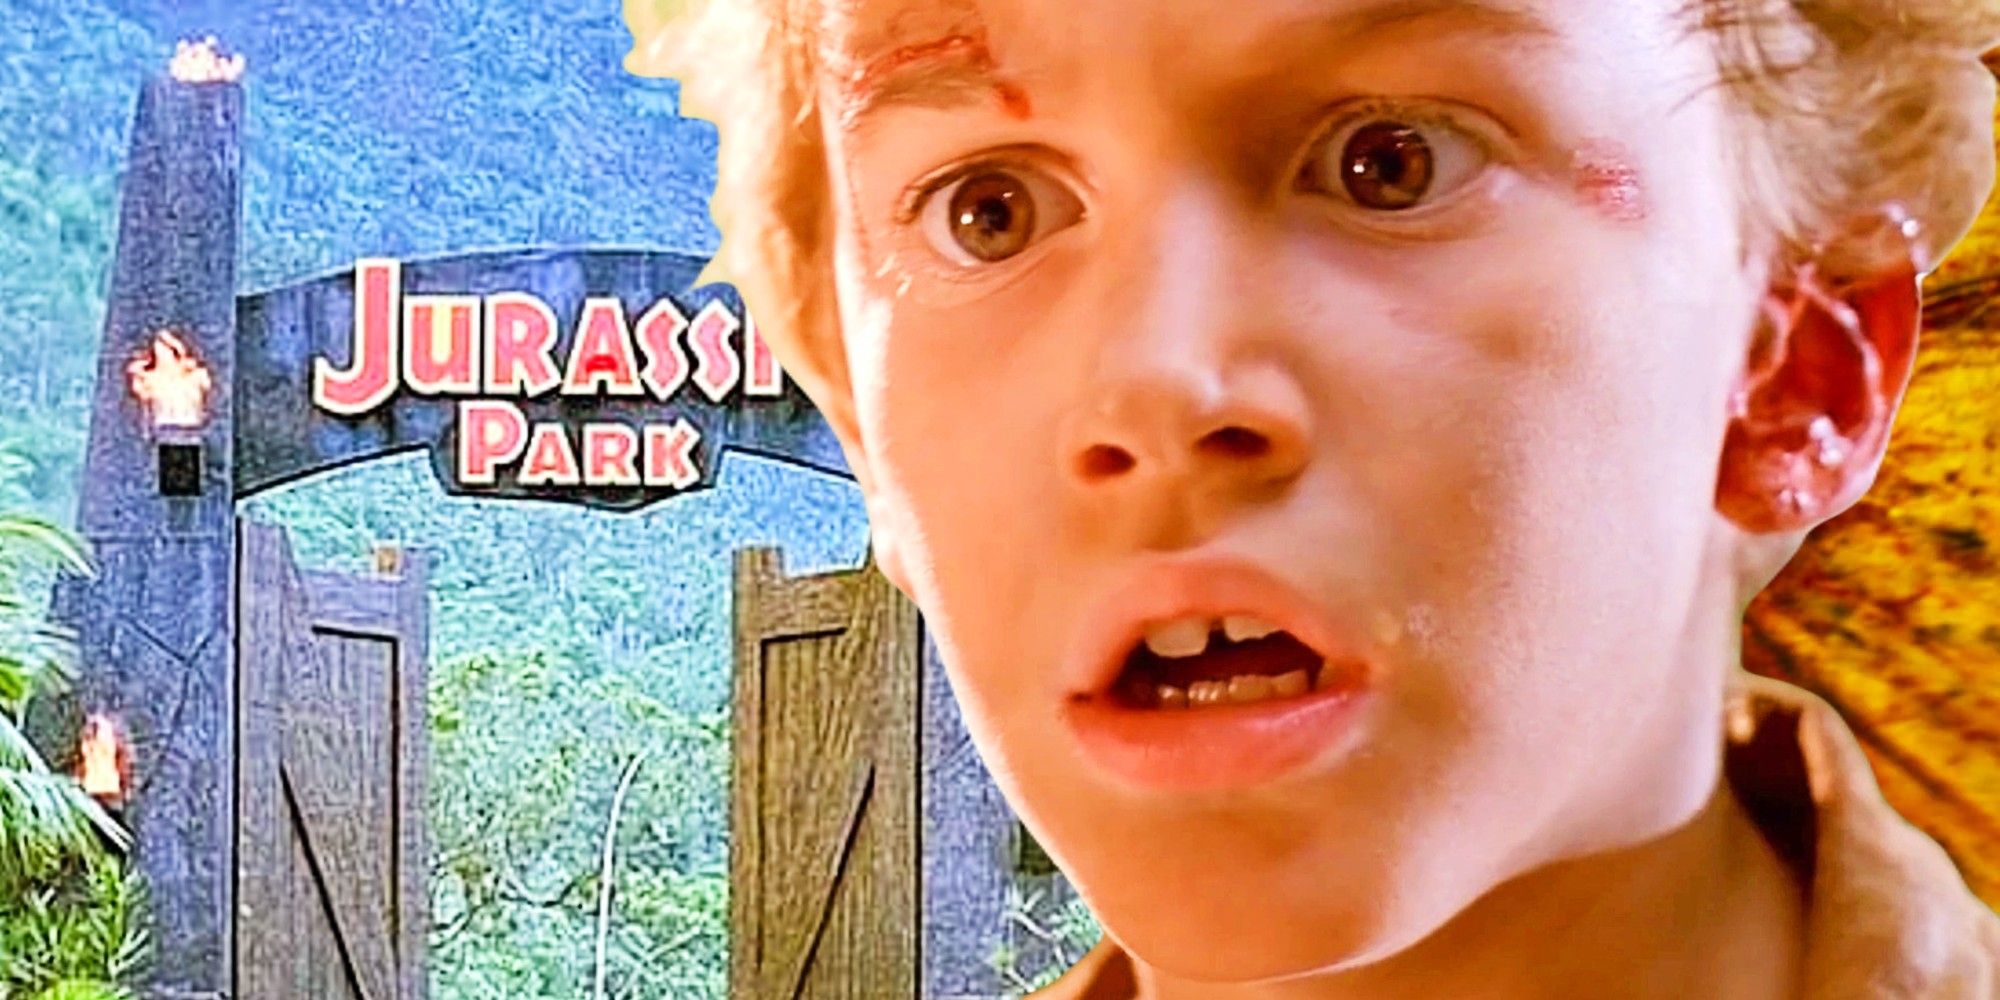 Jurassic-Park-mistakes-goofs